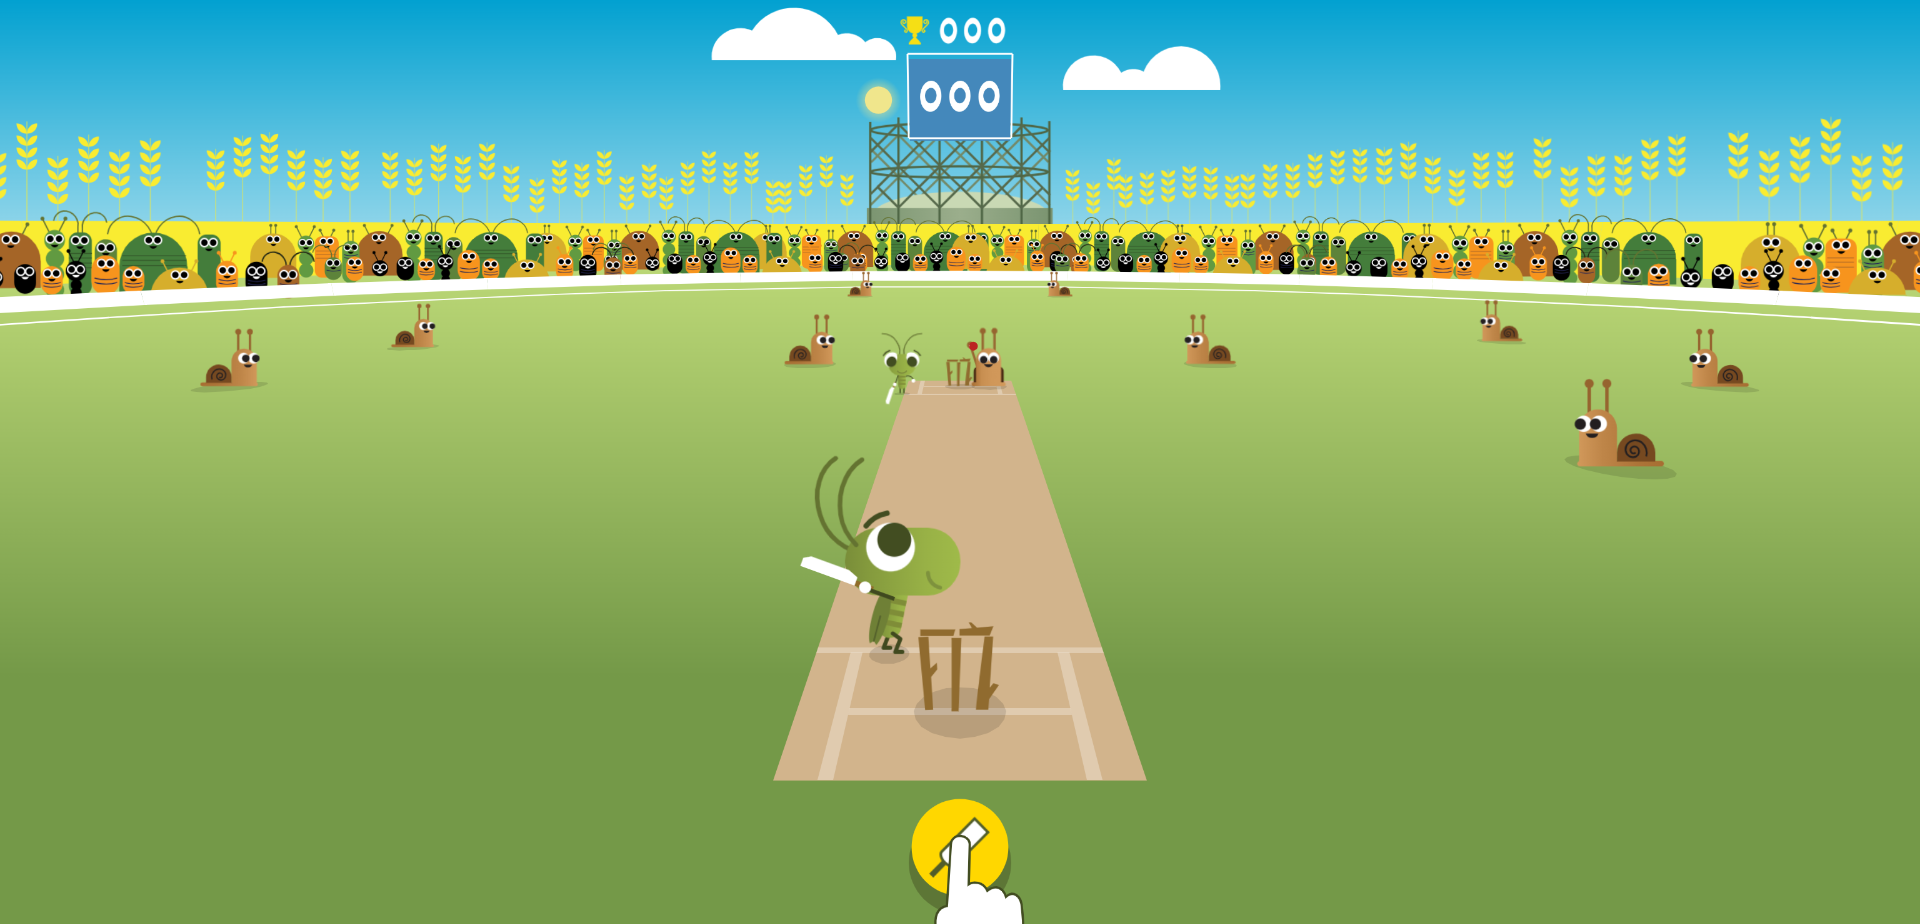 بازی Doodle Cricket گوگل